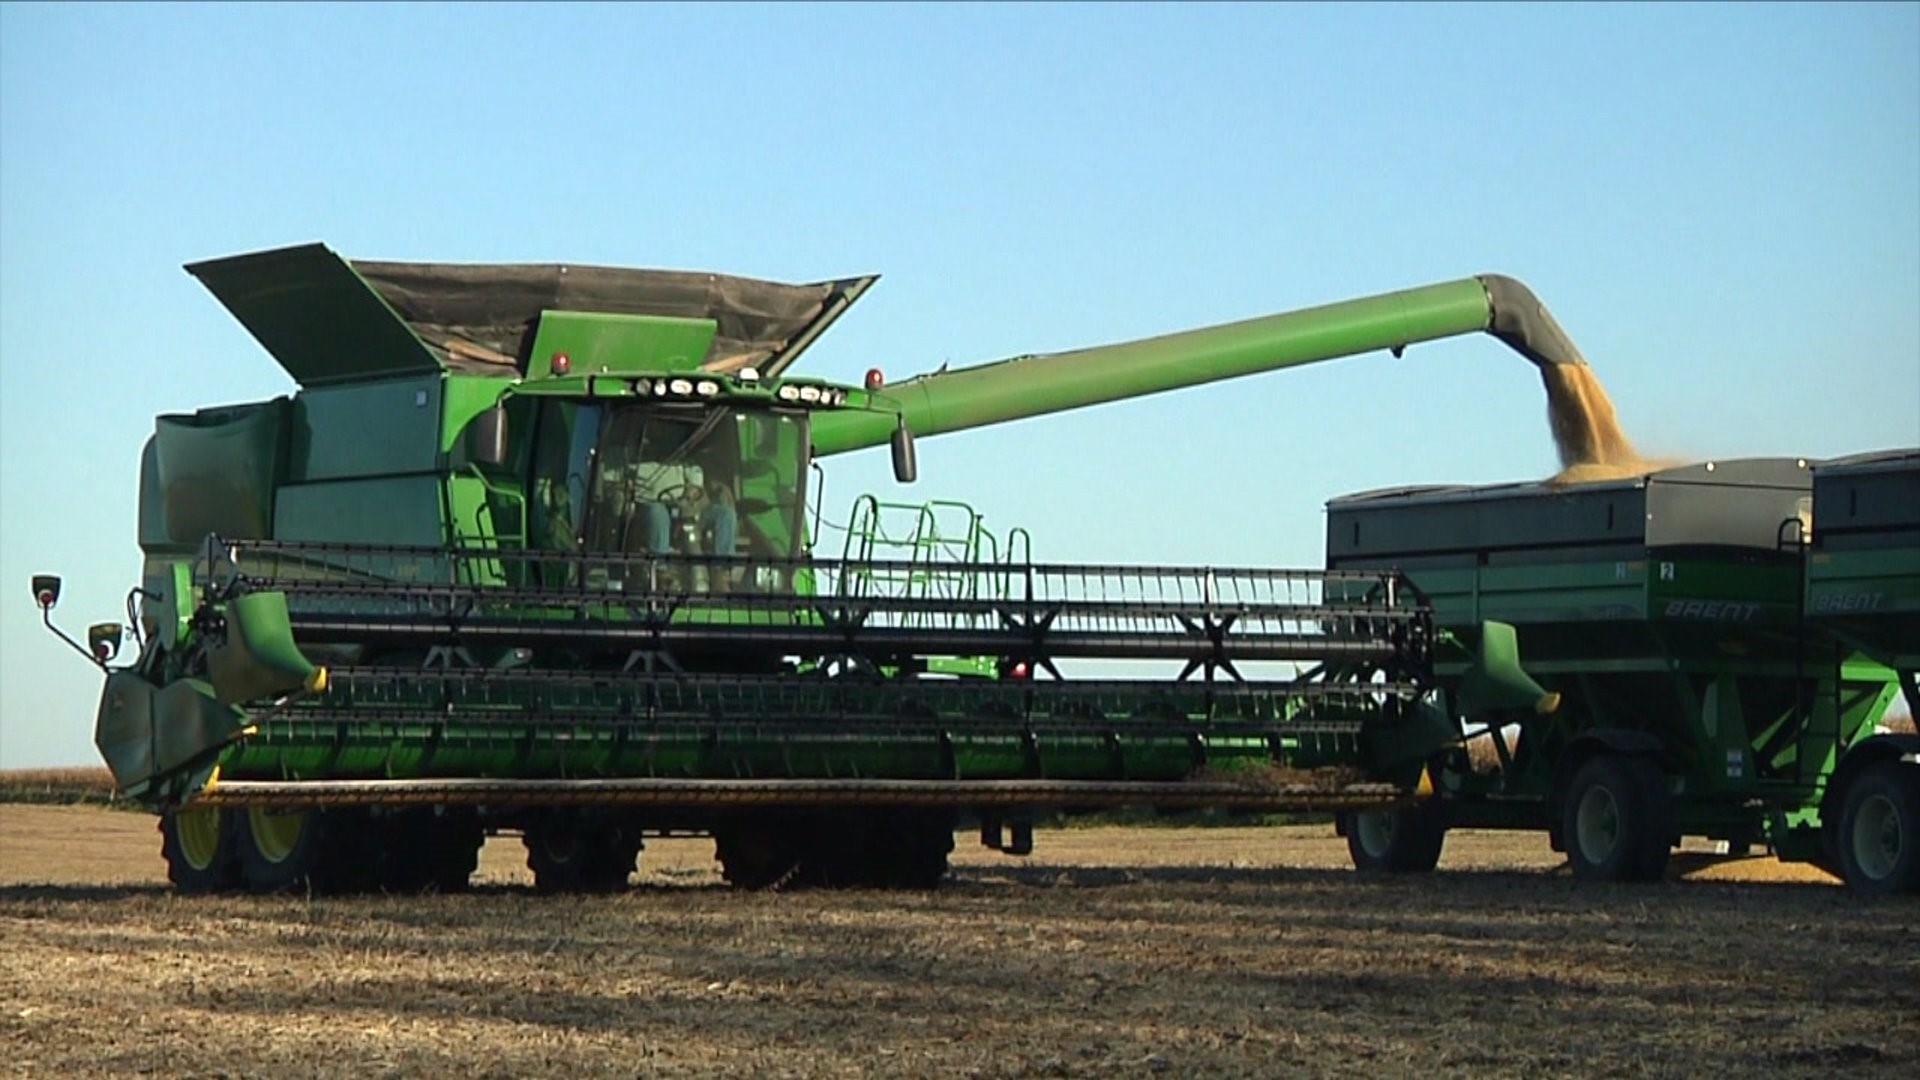 Taylor Ridge farmer weighs in on U.S.-China soybean trade truce